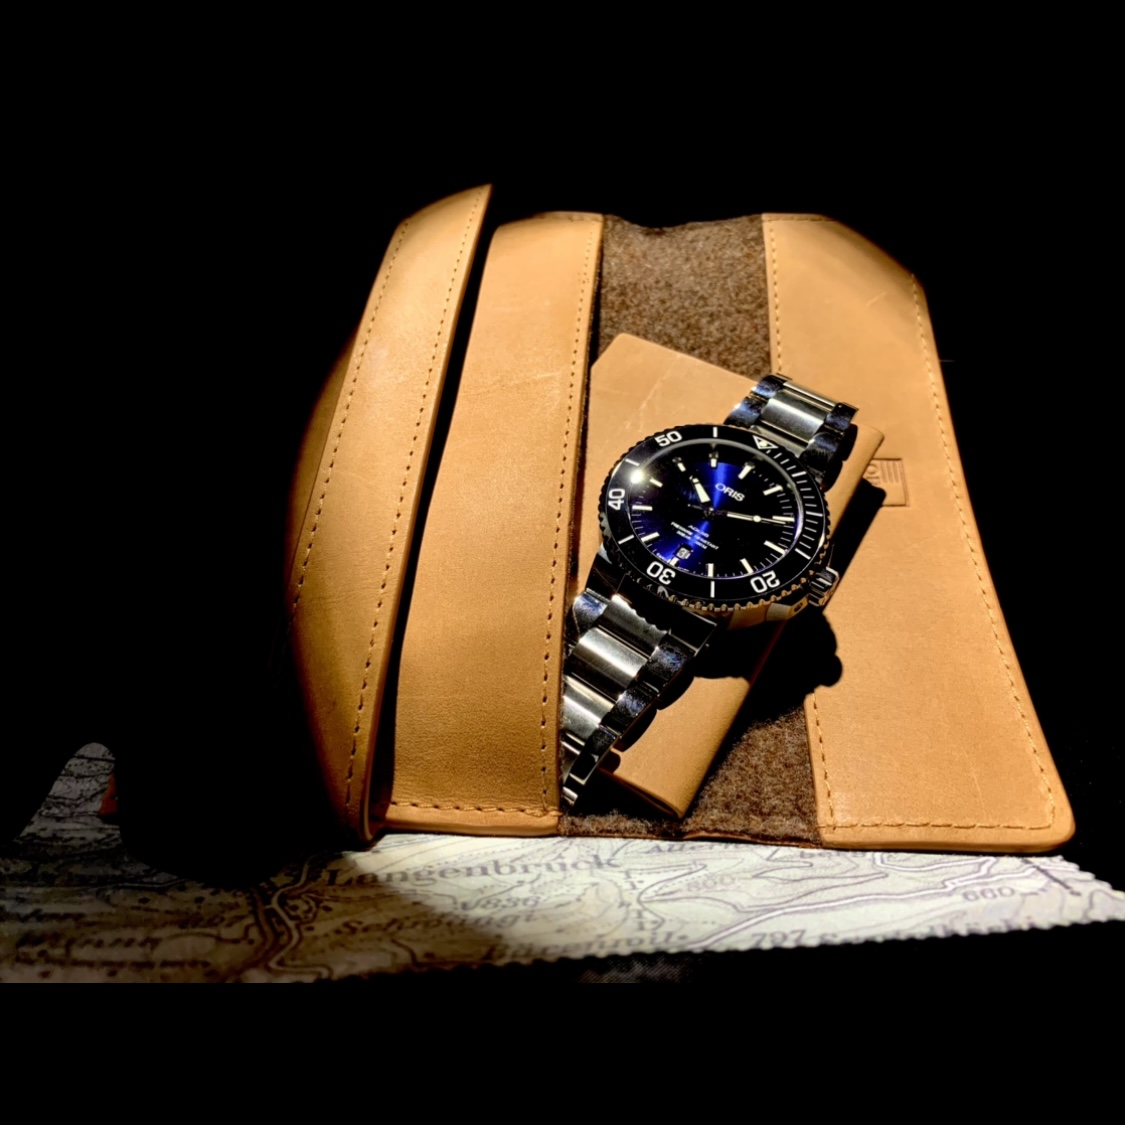 Oris Aquis デイト　オリス　ORIS　アクイス　メンズ腕時計　腕時計　高級時計　機械式腕時計　01 733 7730 4135-07 8 24 05PEB